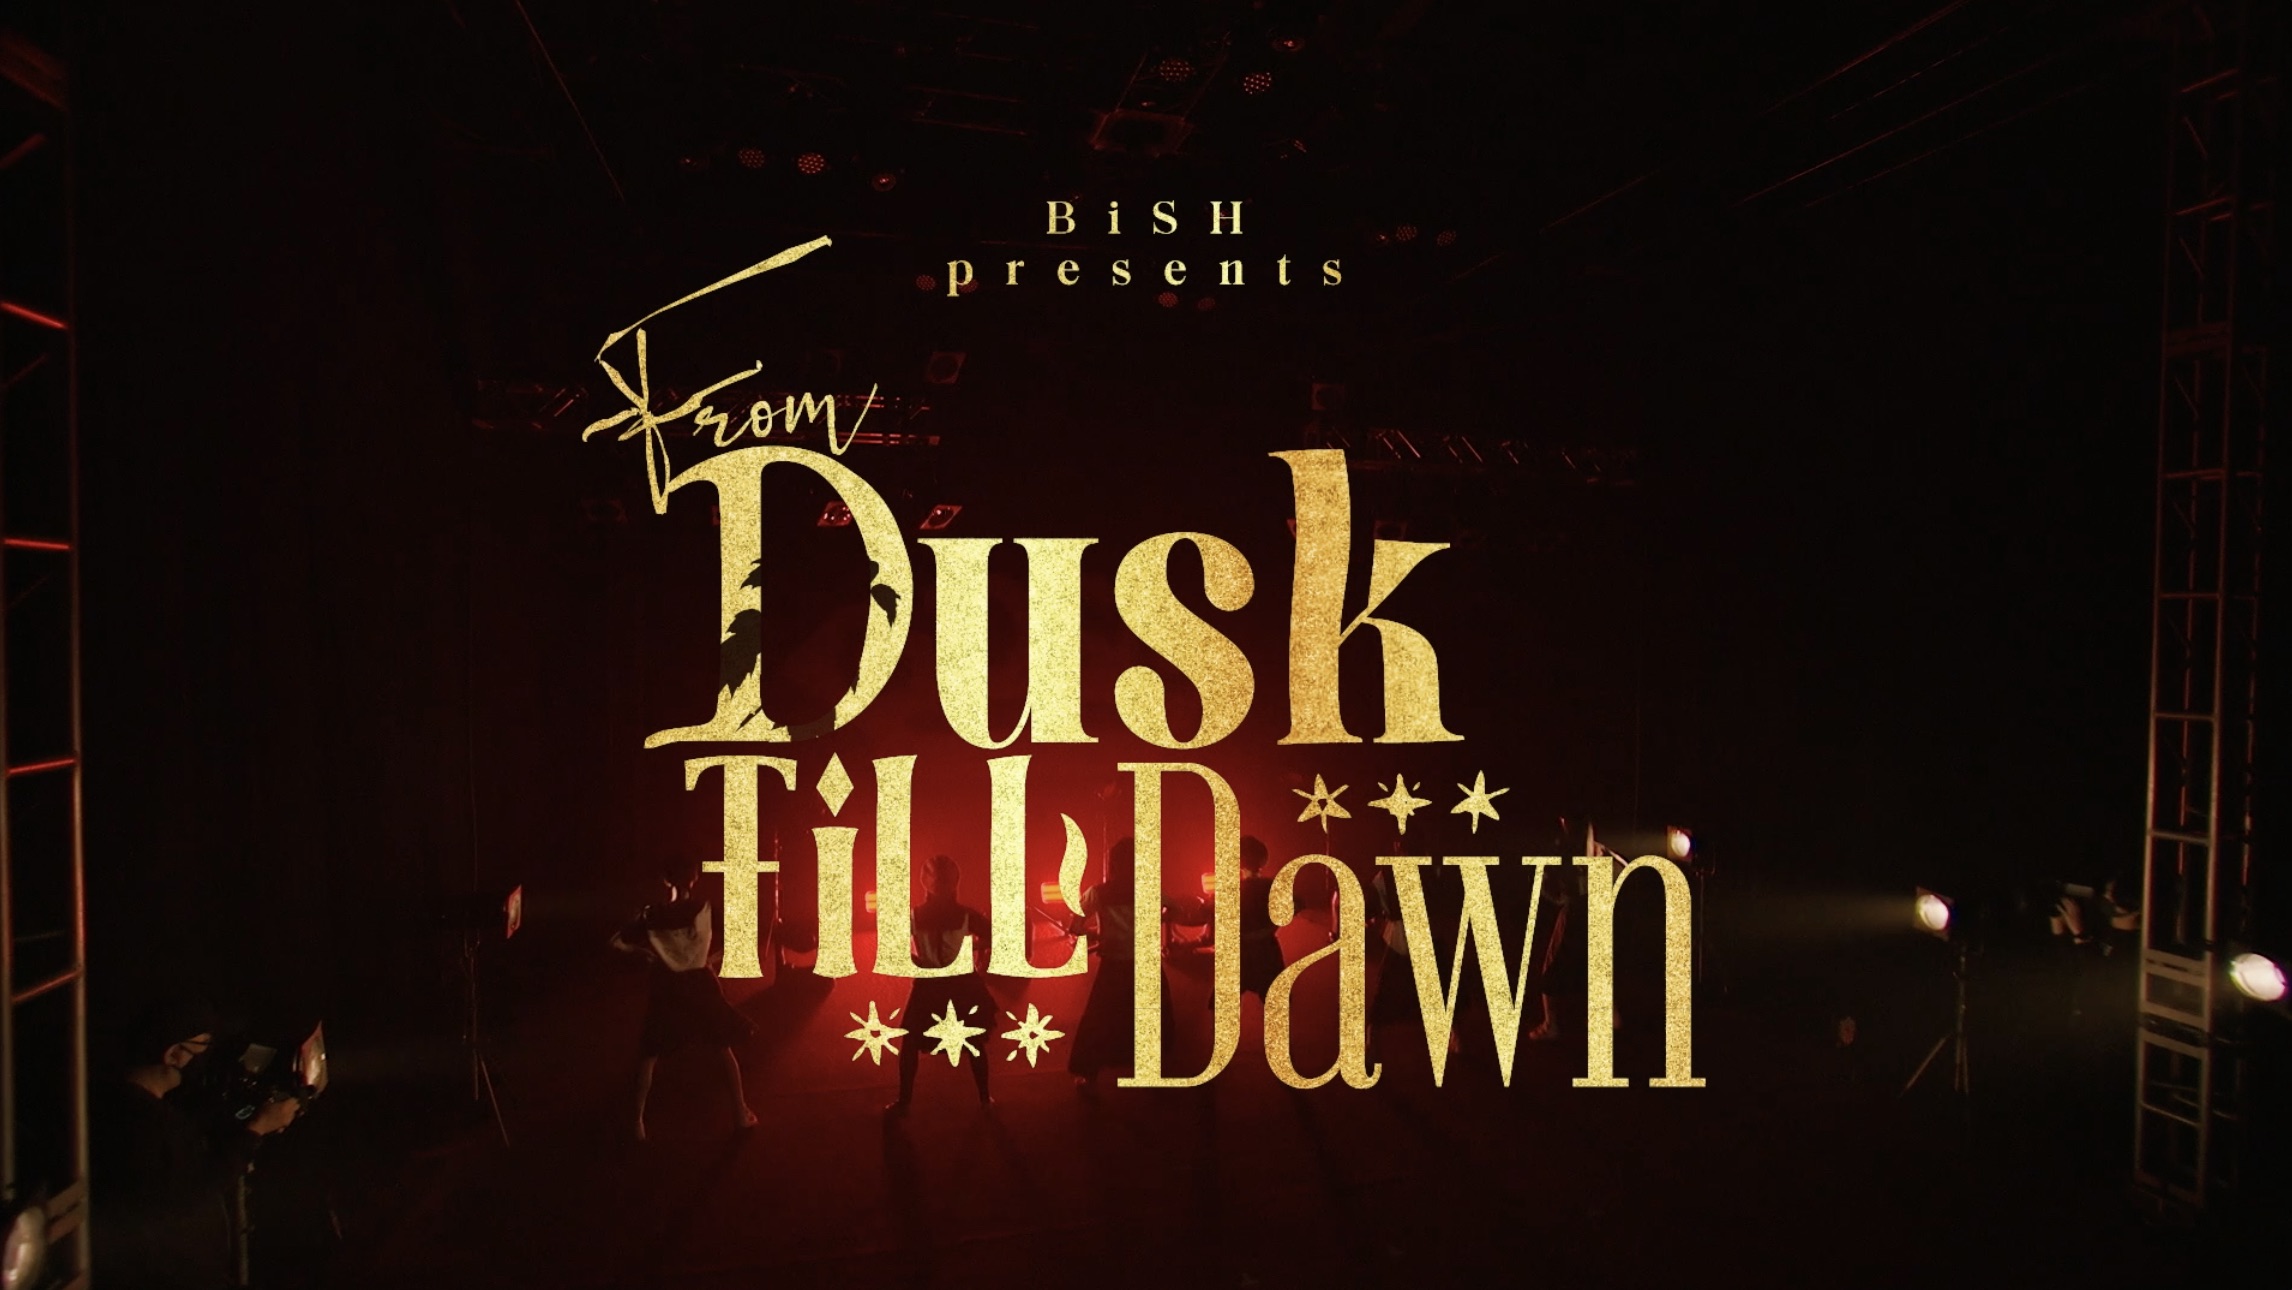 BiSH presents FROM DUSK TiLL DAWN 豪華盤 ミュージック DVD